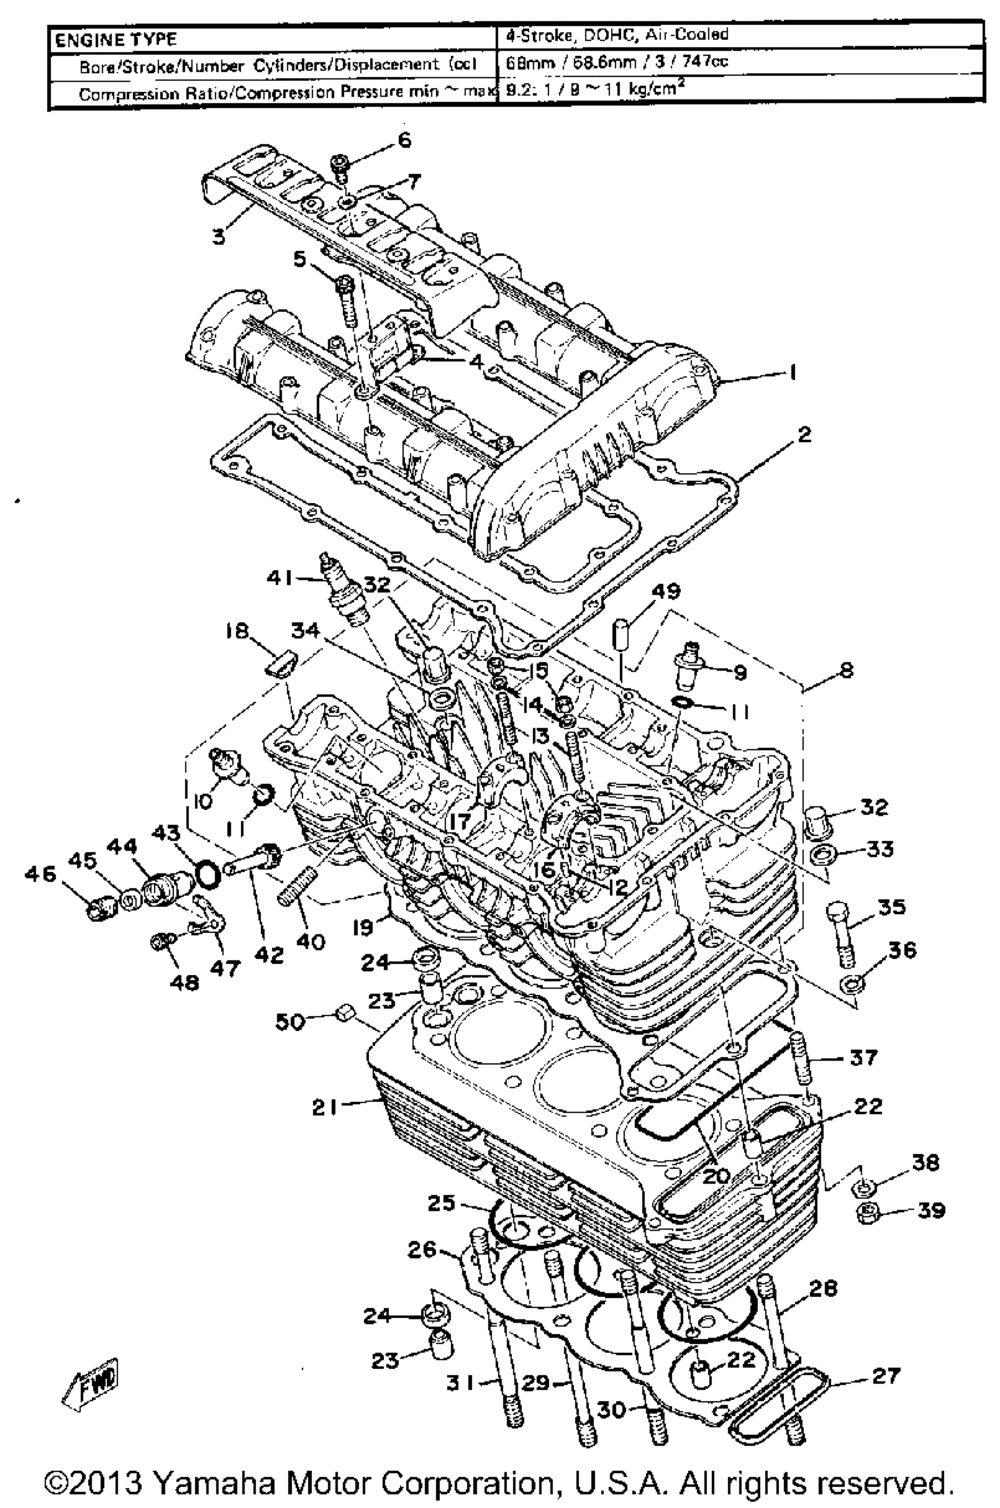 Cylinder head - cylinder